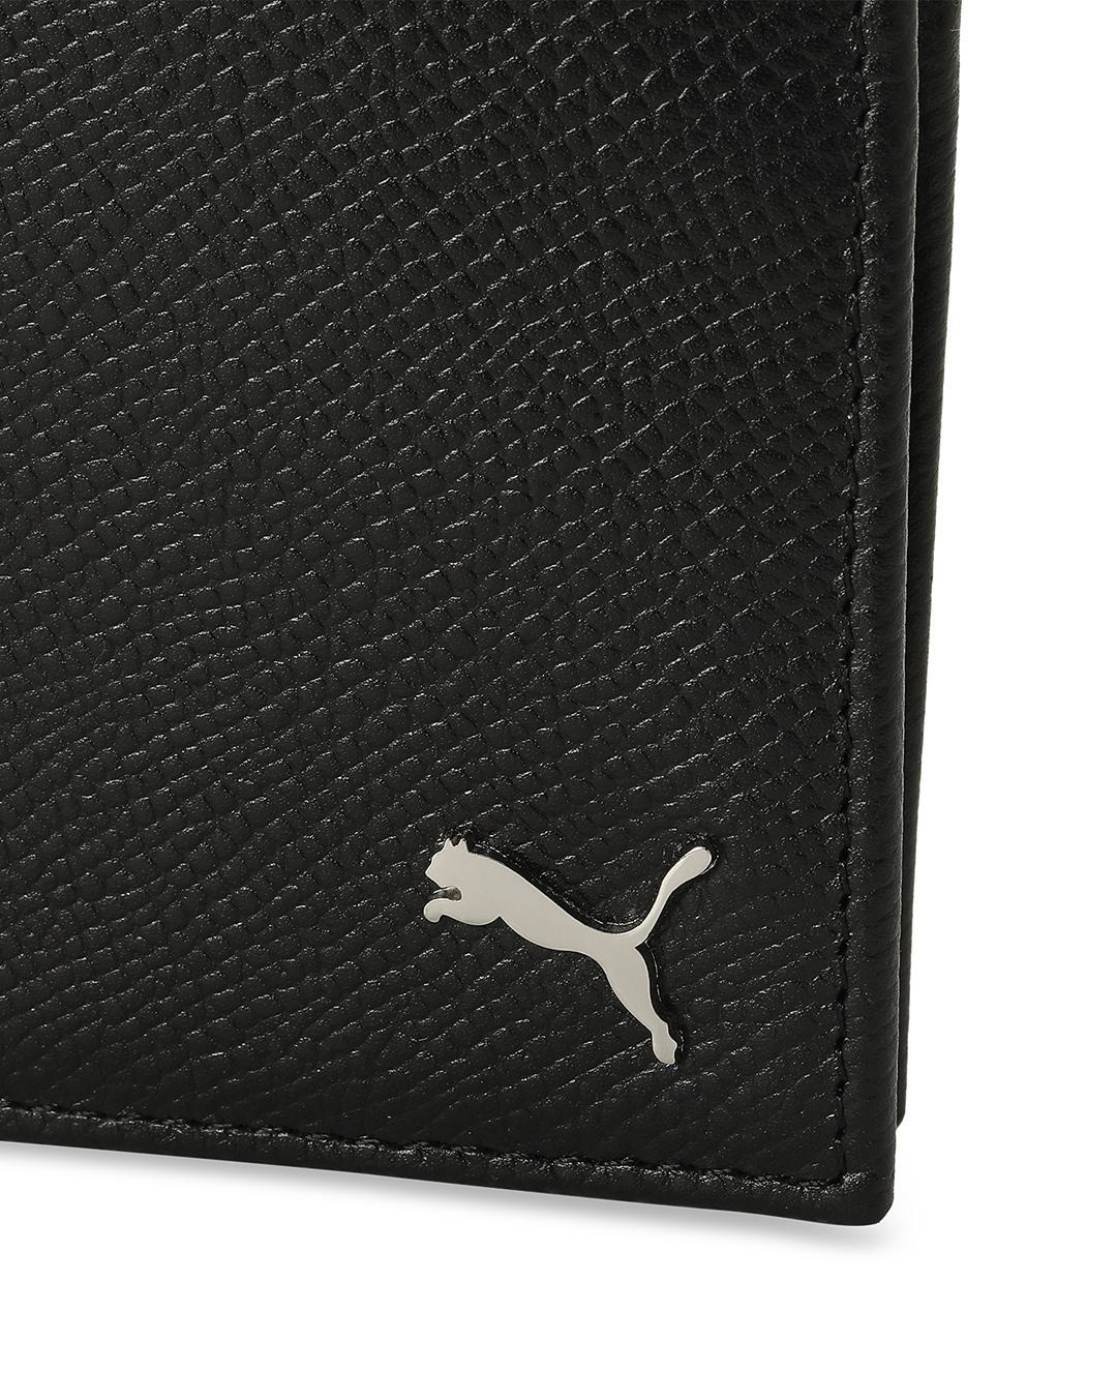 100% Brand New Authentic Puma Black Bifold Genuine Leather Men Wallet  SH-BLACK | eBay